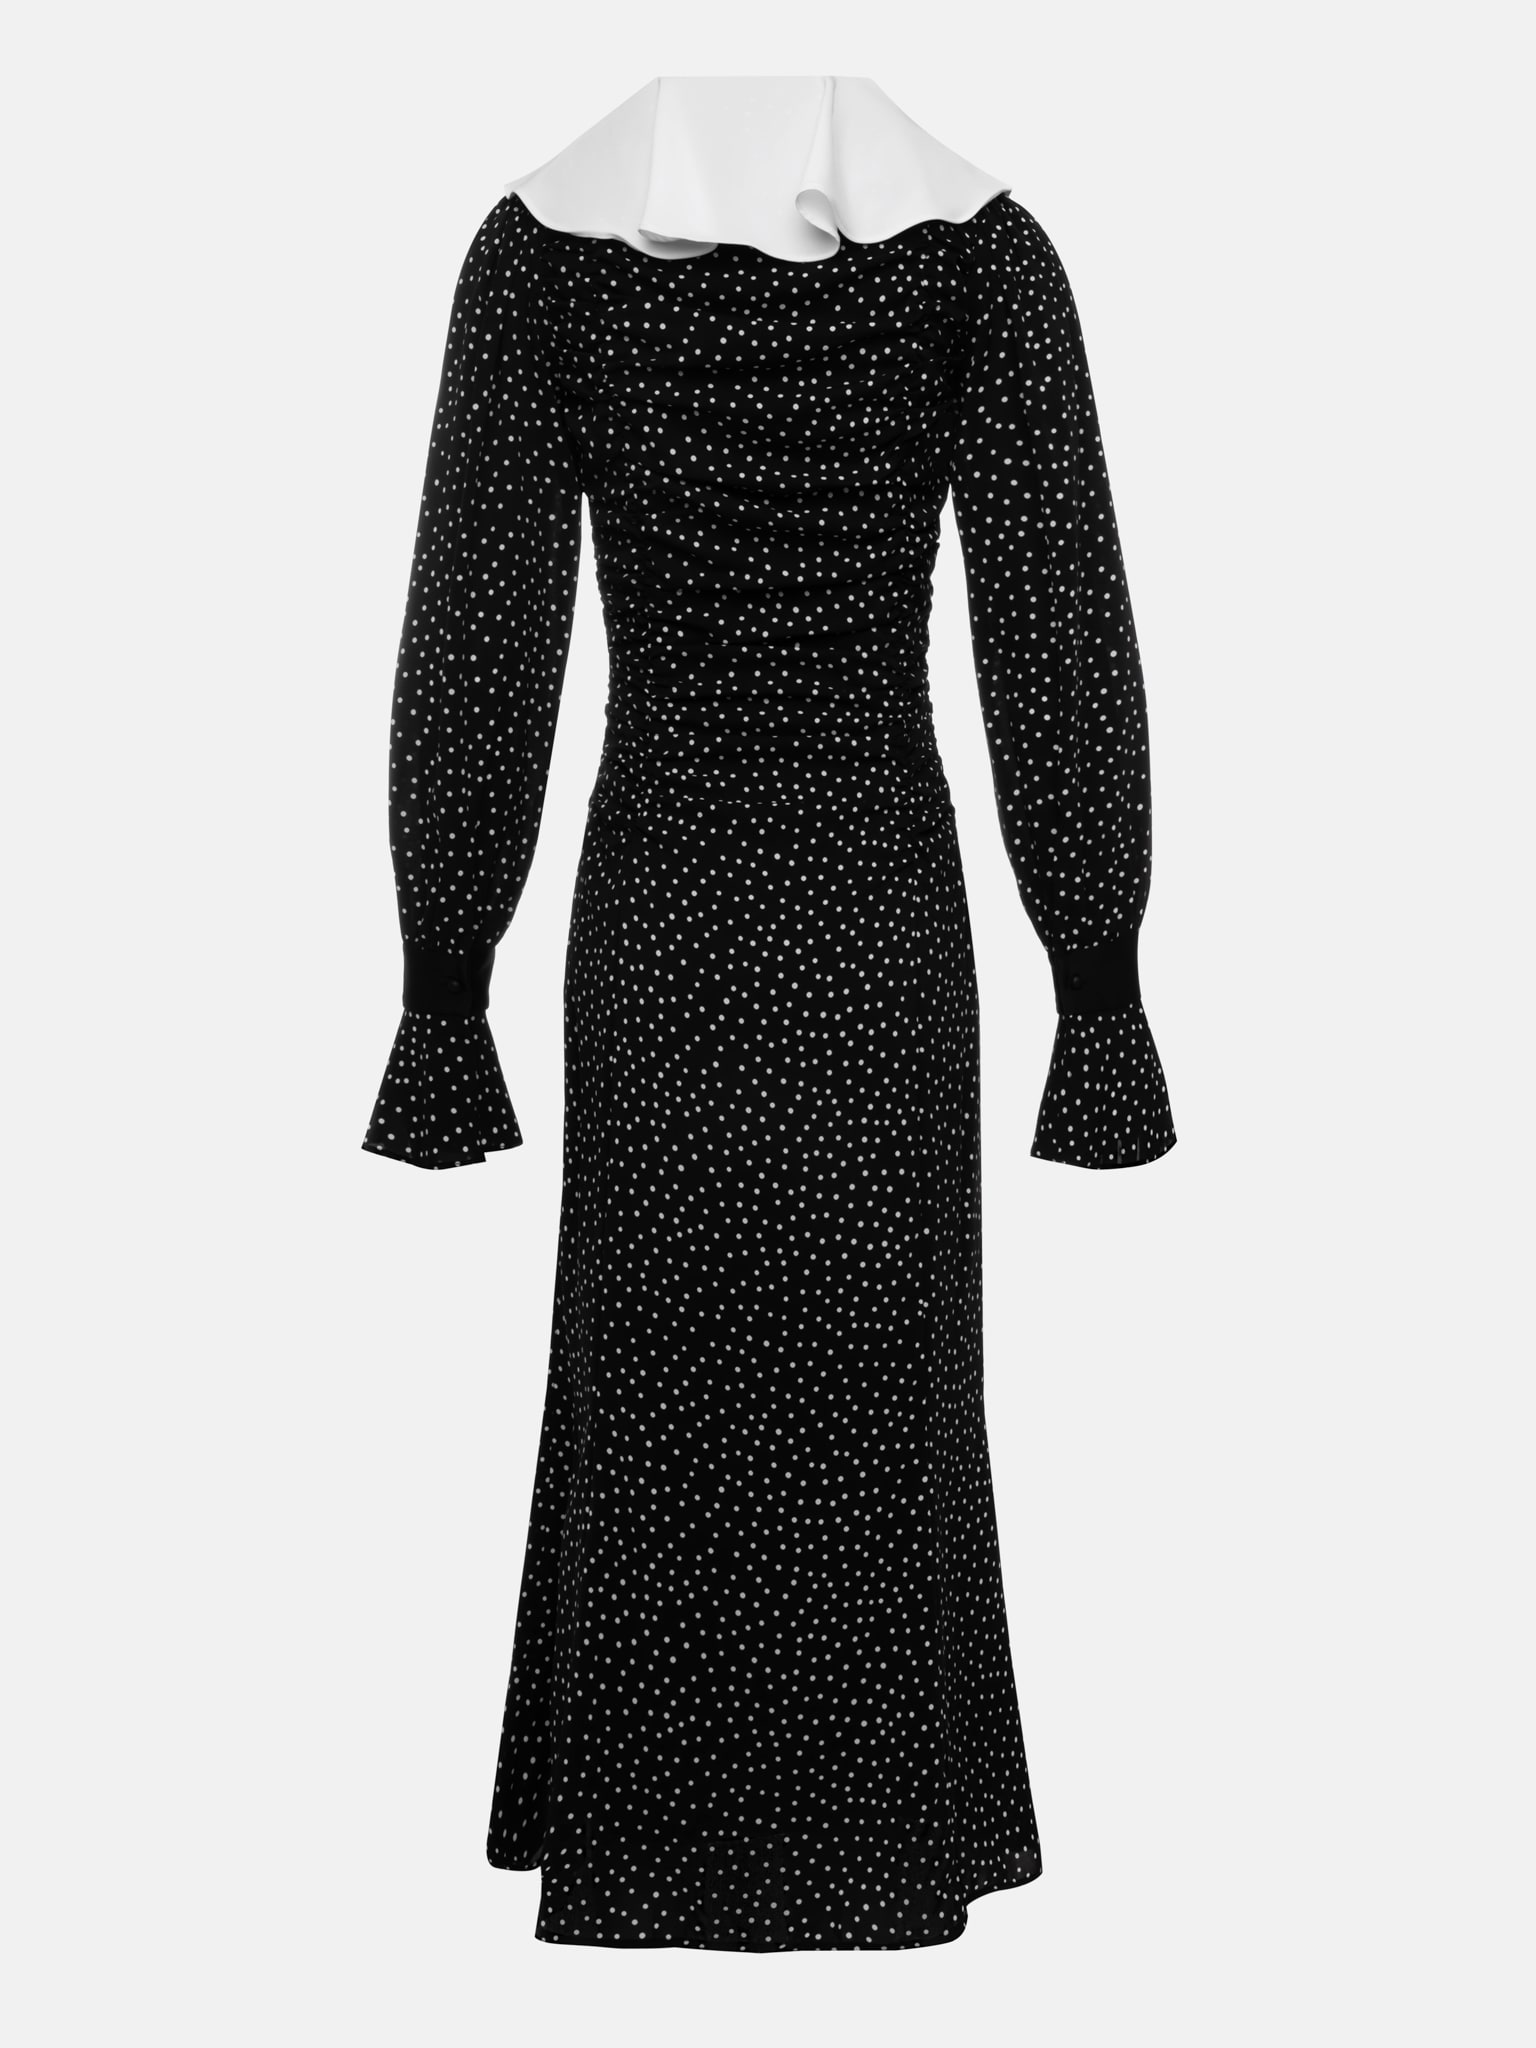 Polka dot maxi dress with contrast collar flounce